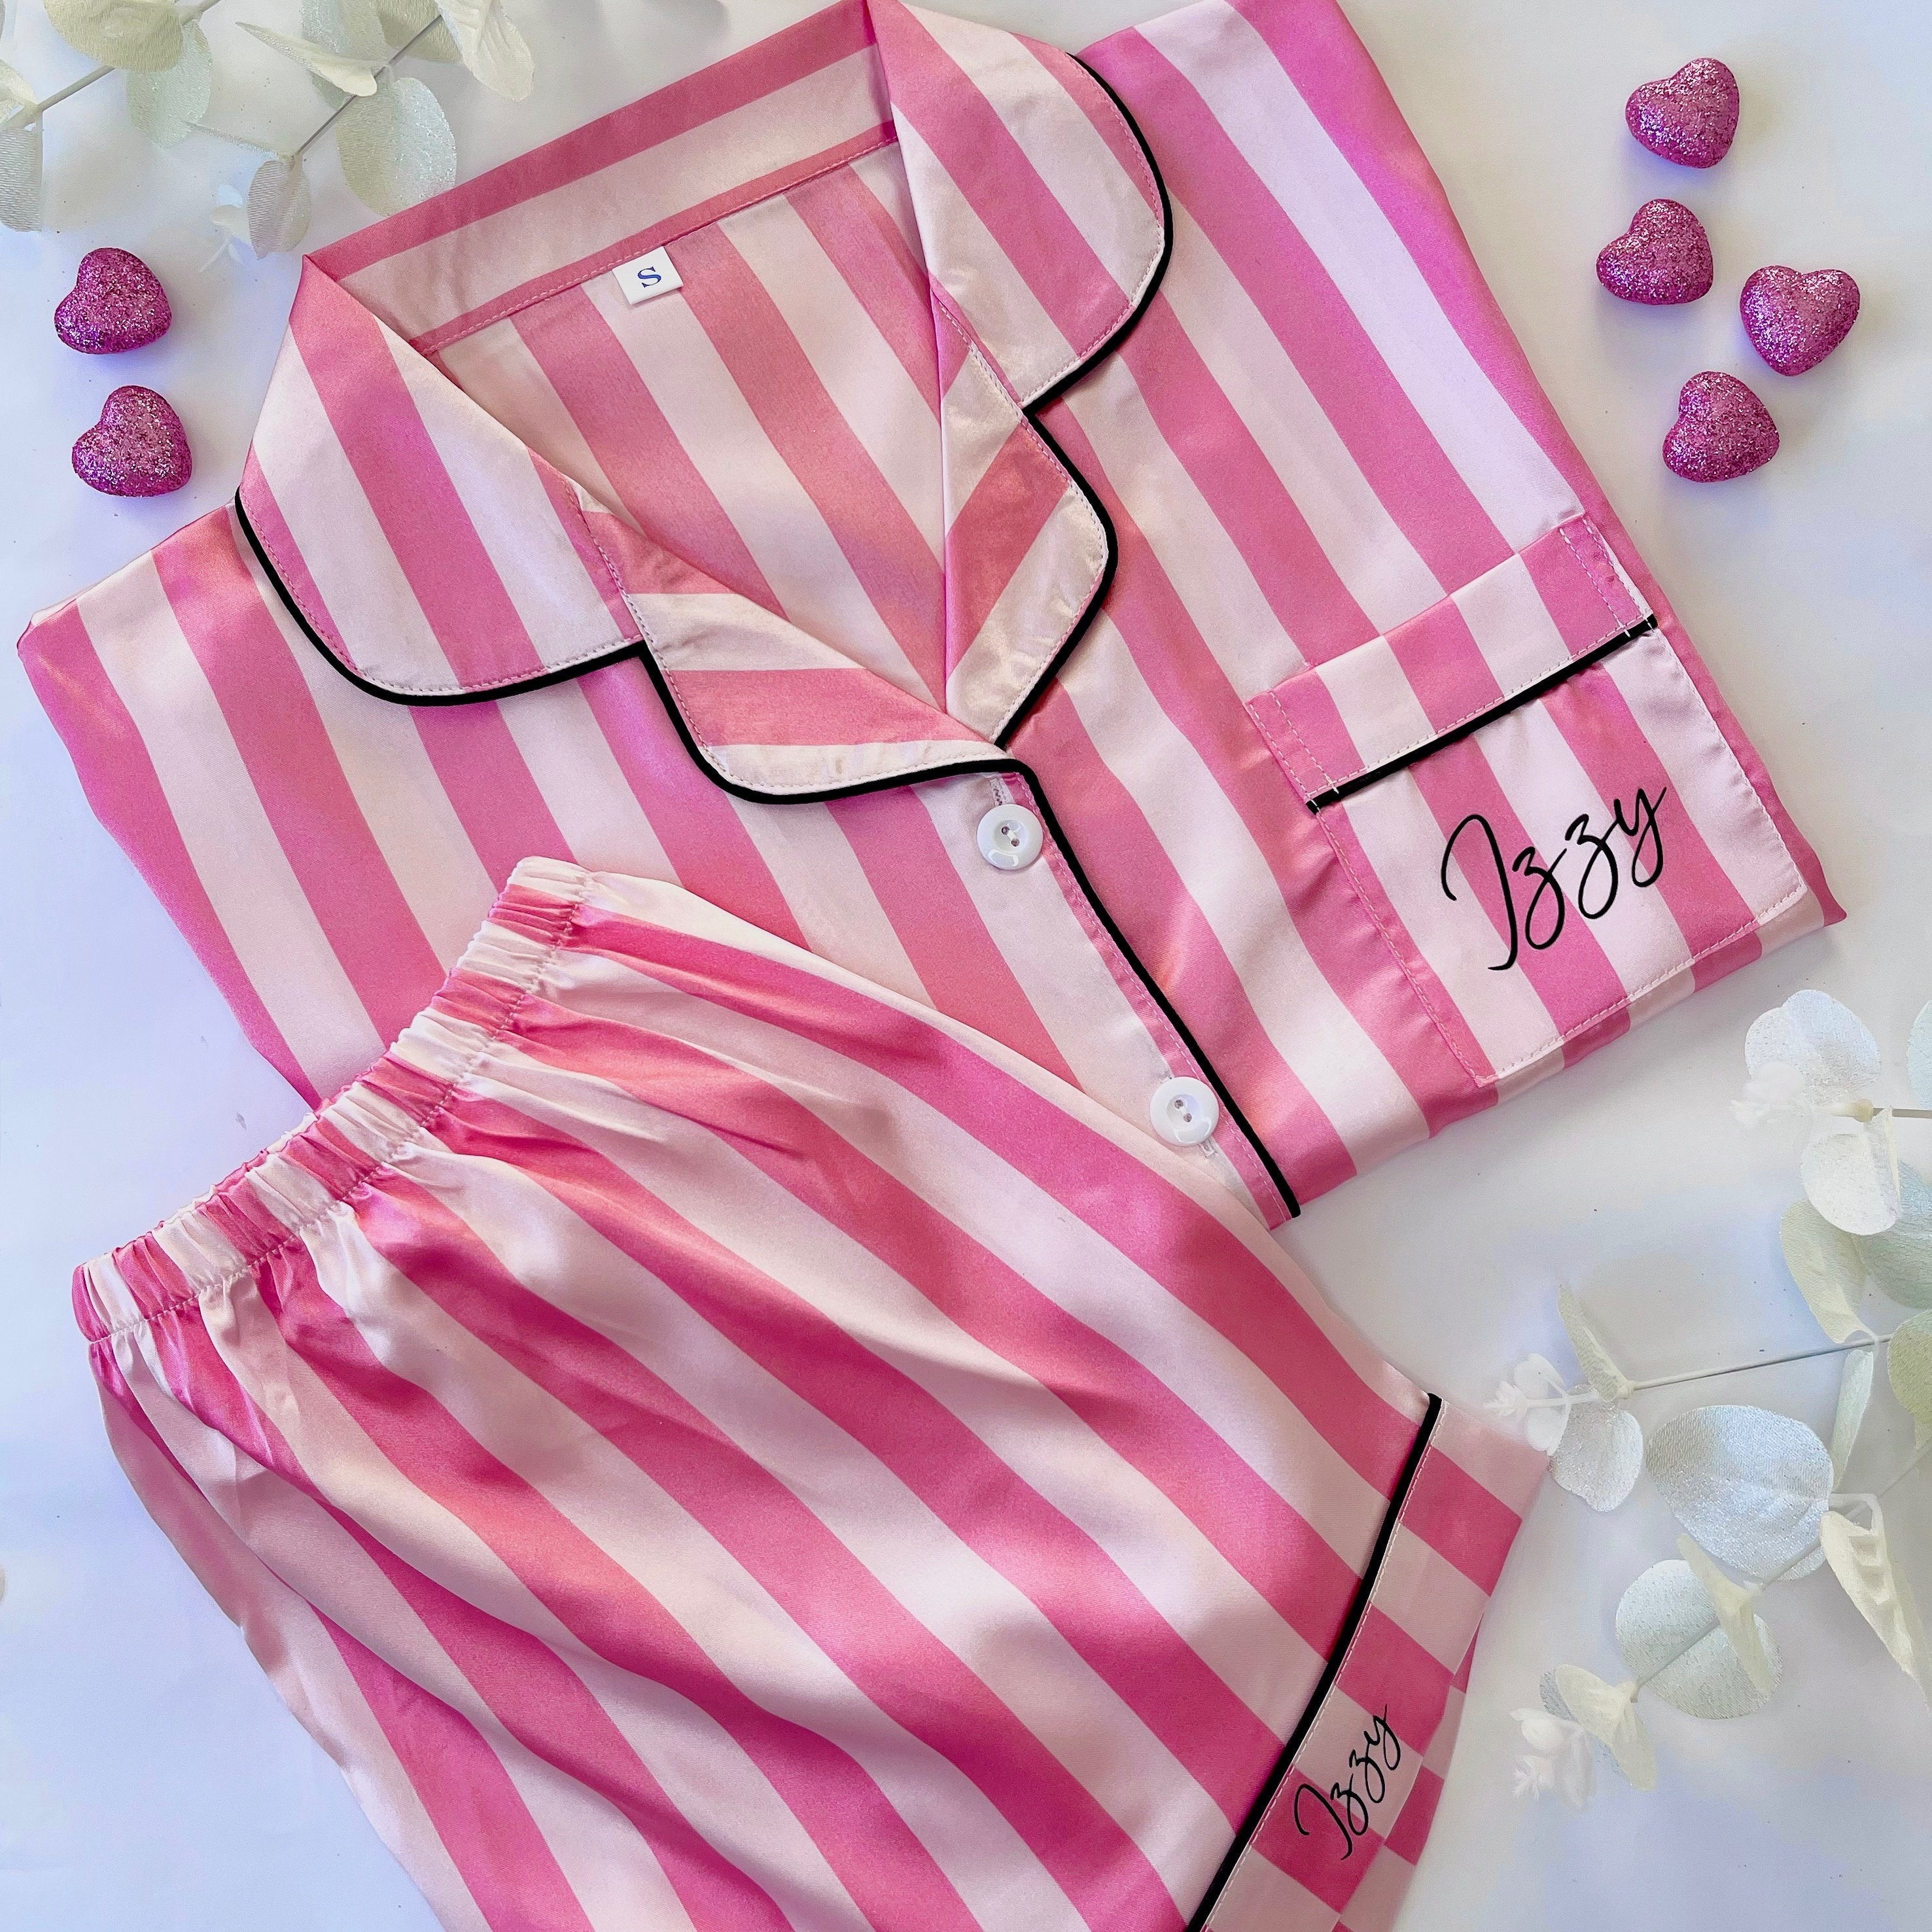 Bedruckter Pyjama - Hellrosa/Barbie - DAMEN